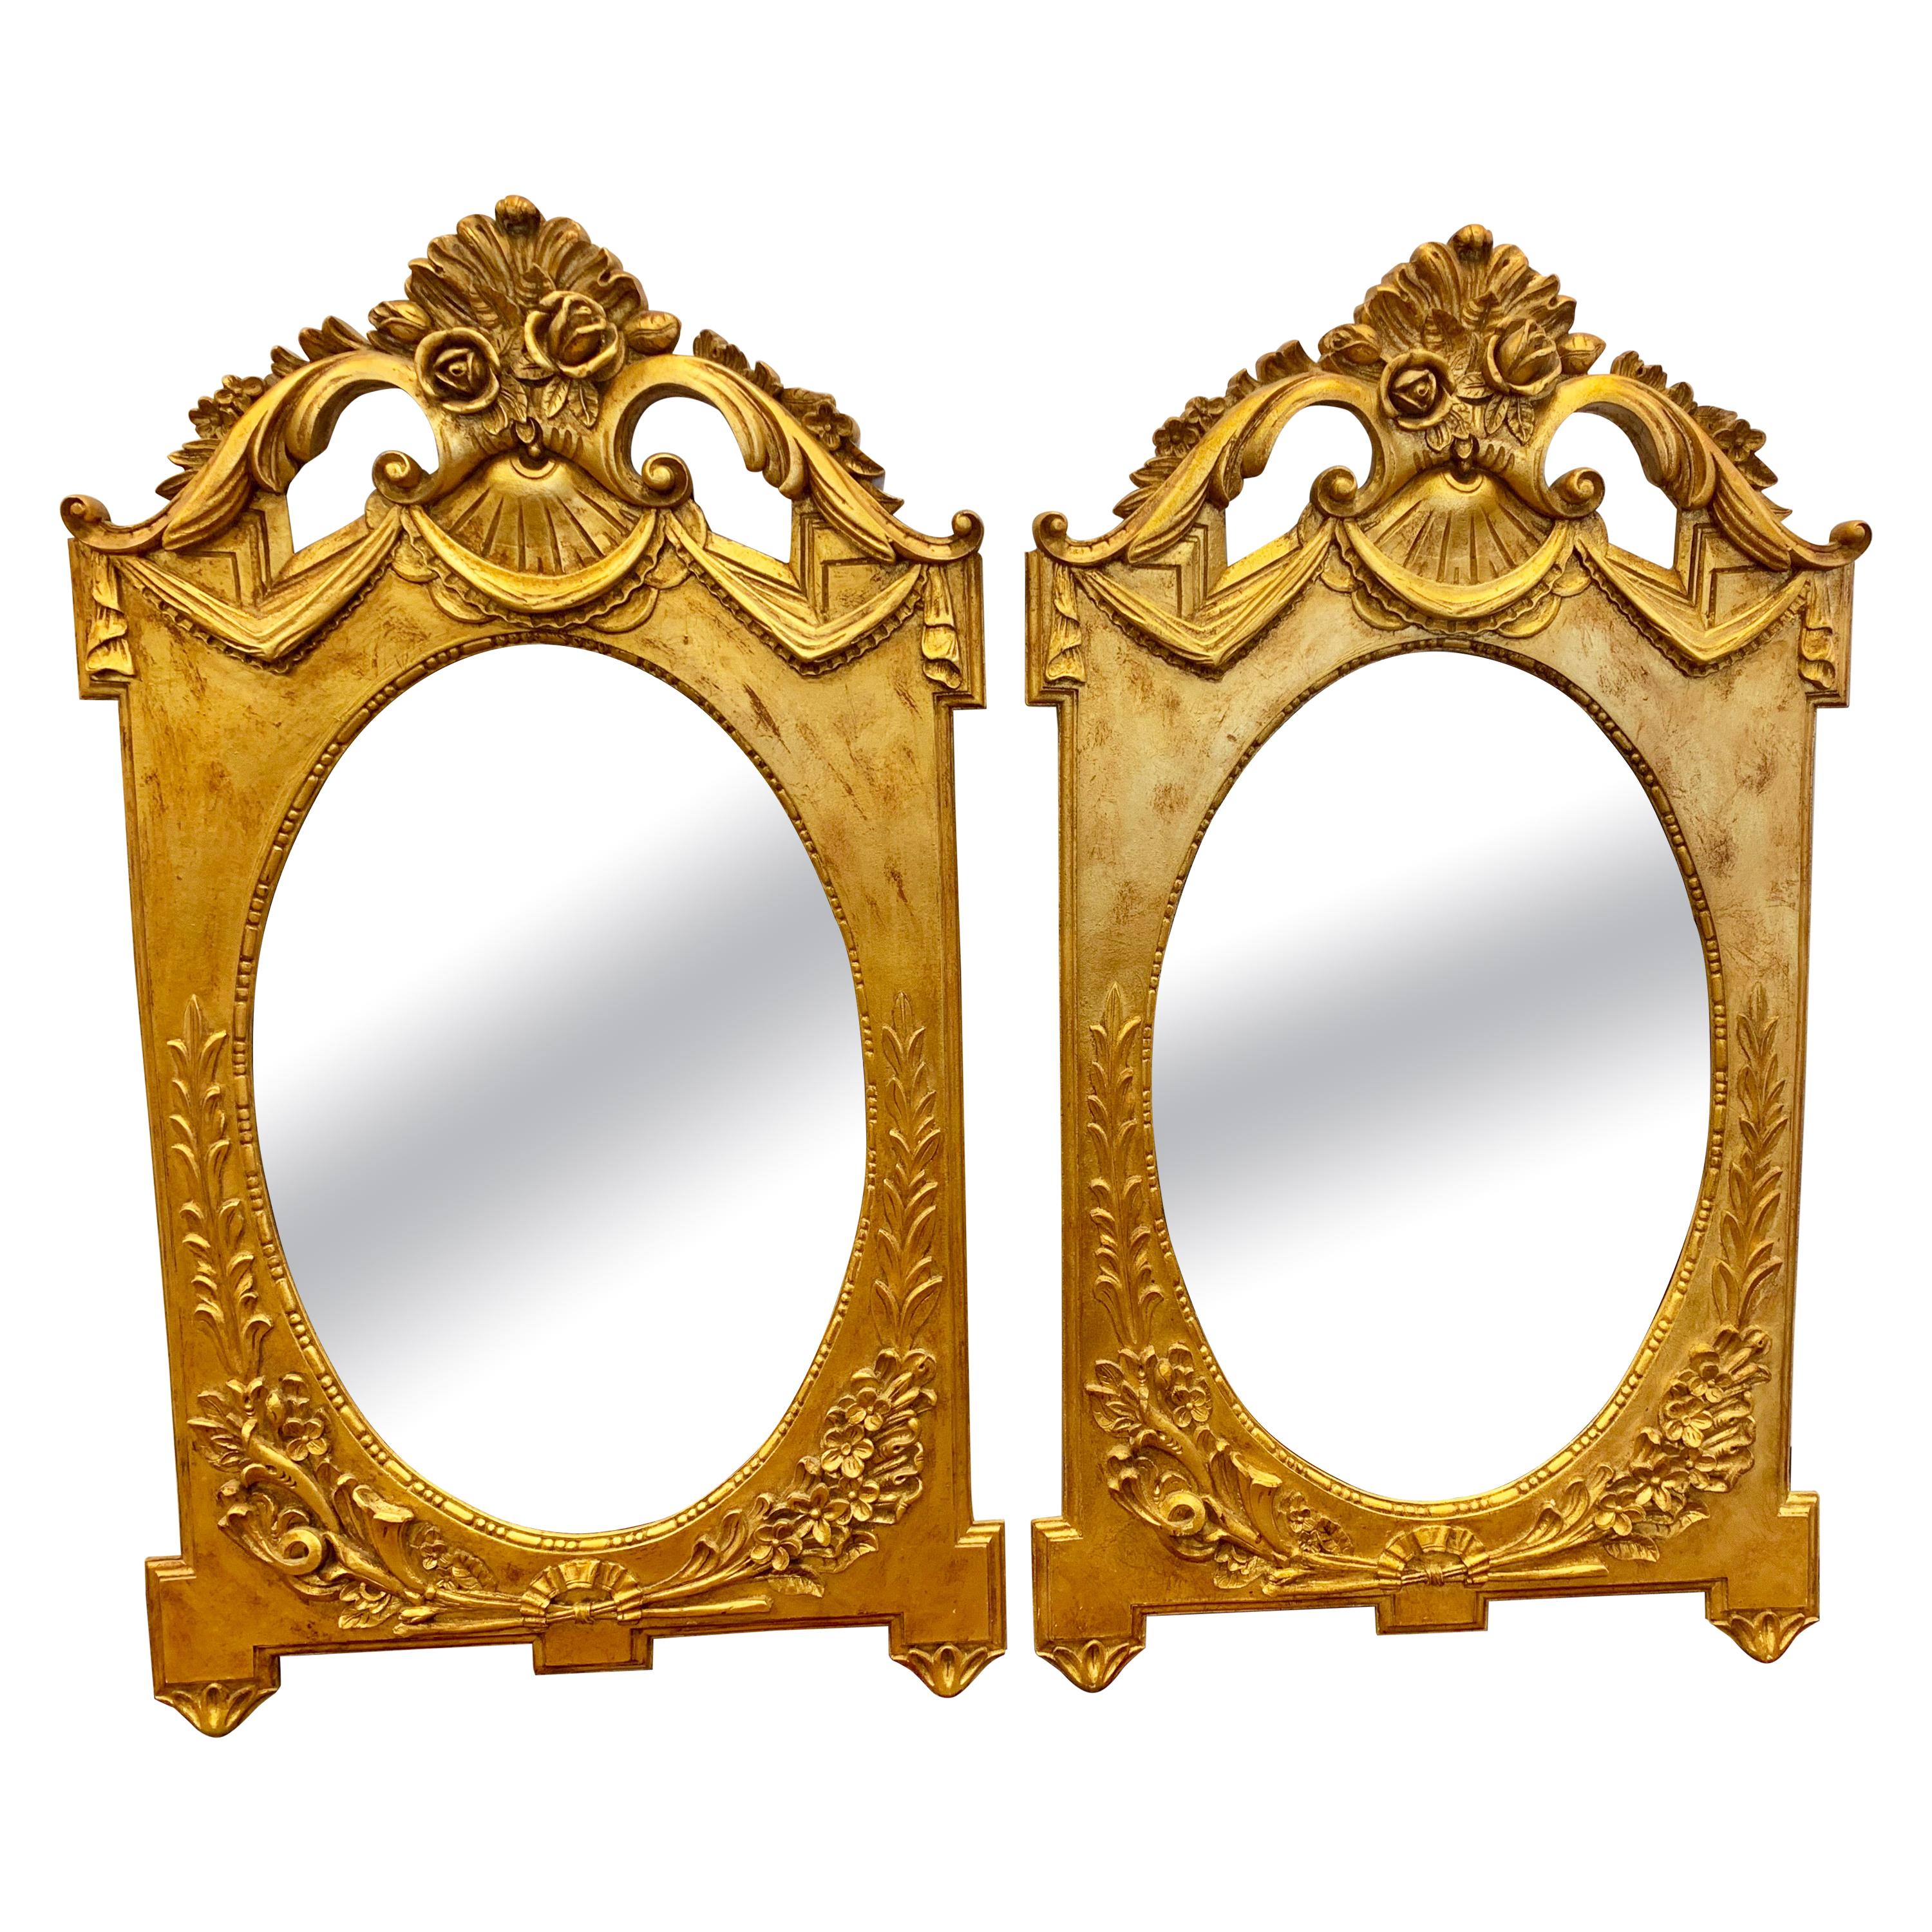 Matching Pair of Italian Neoclassical Gilt Gold Mirrors